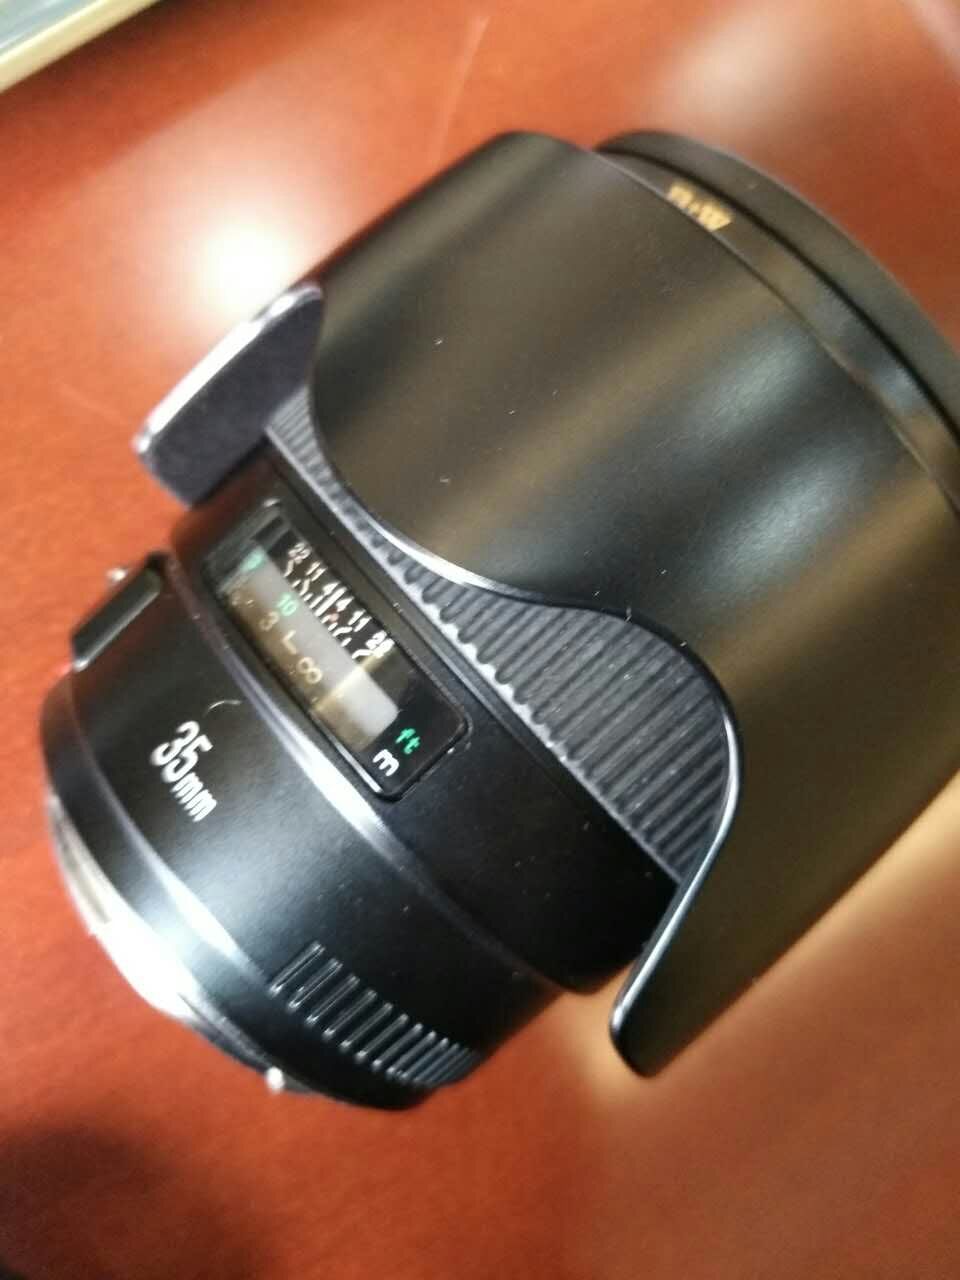 佳能 EF 35mm f/1.4L II USM